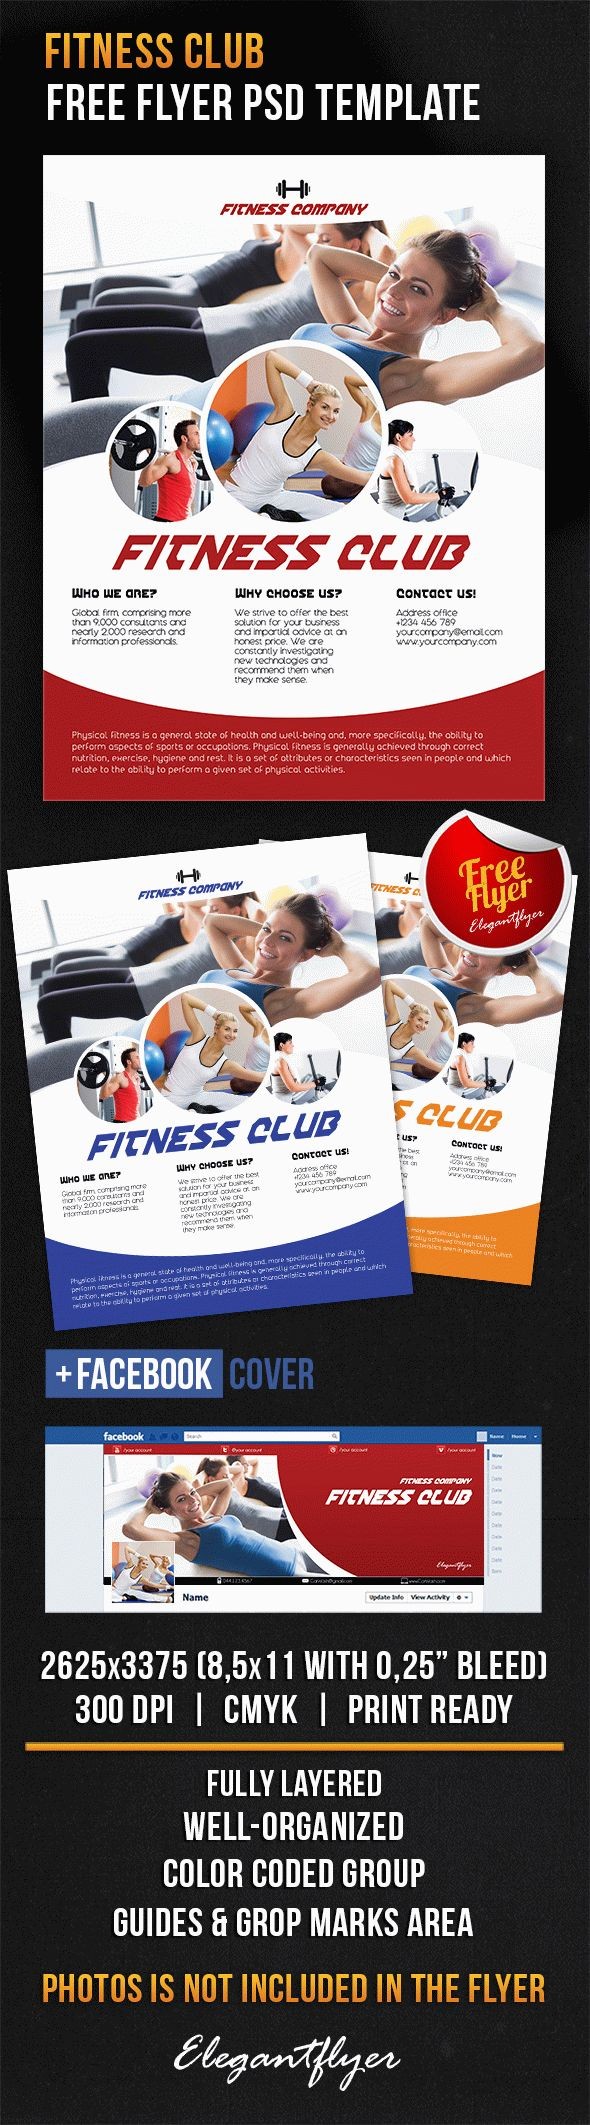 Fitness club by ElegantFlyer